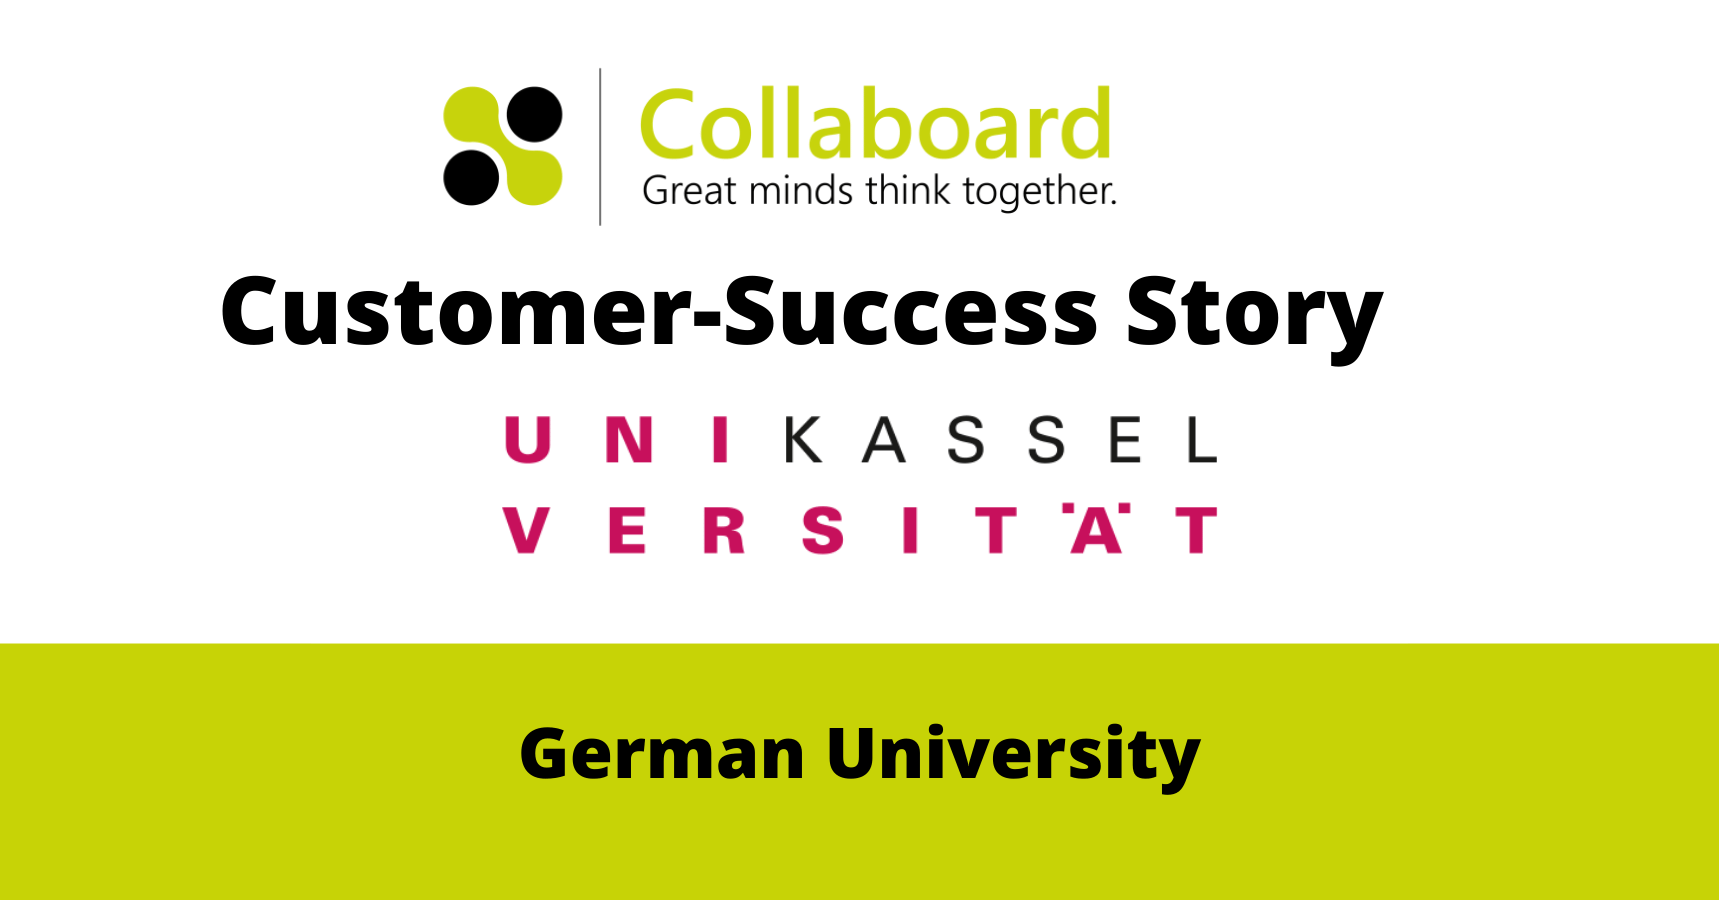 Collaboard-Customer-Success Story University